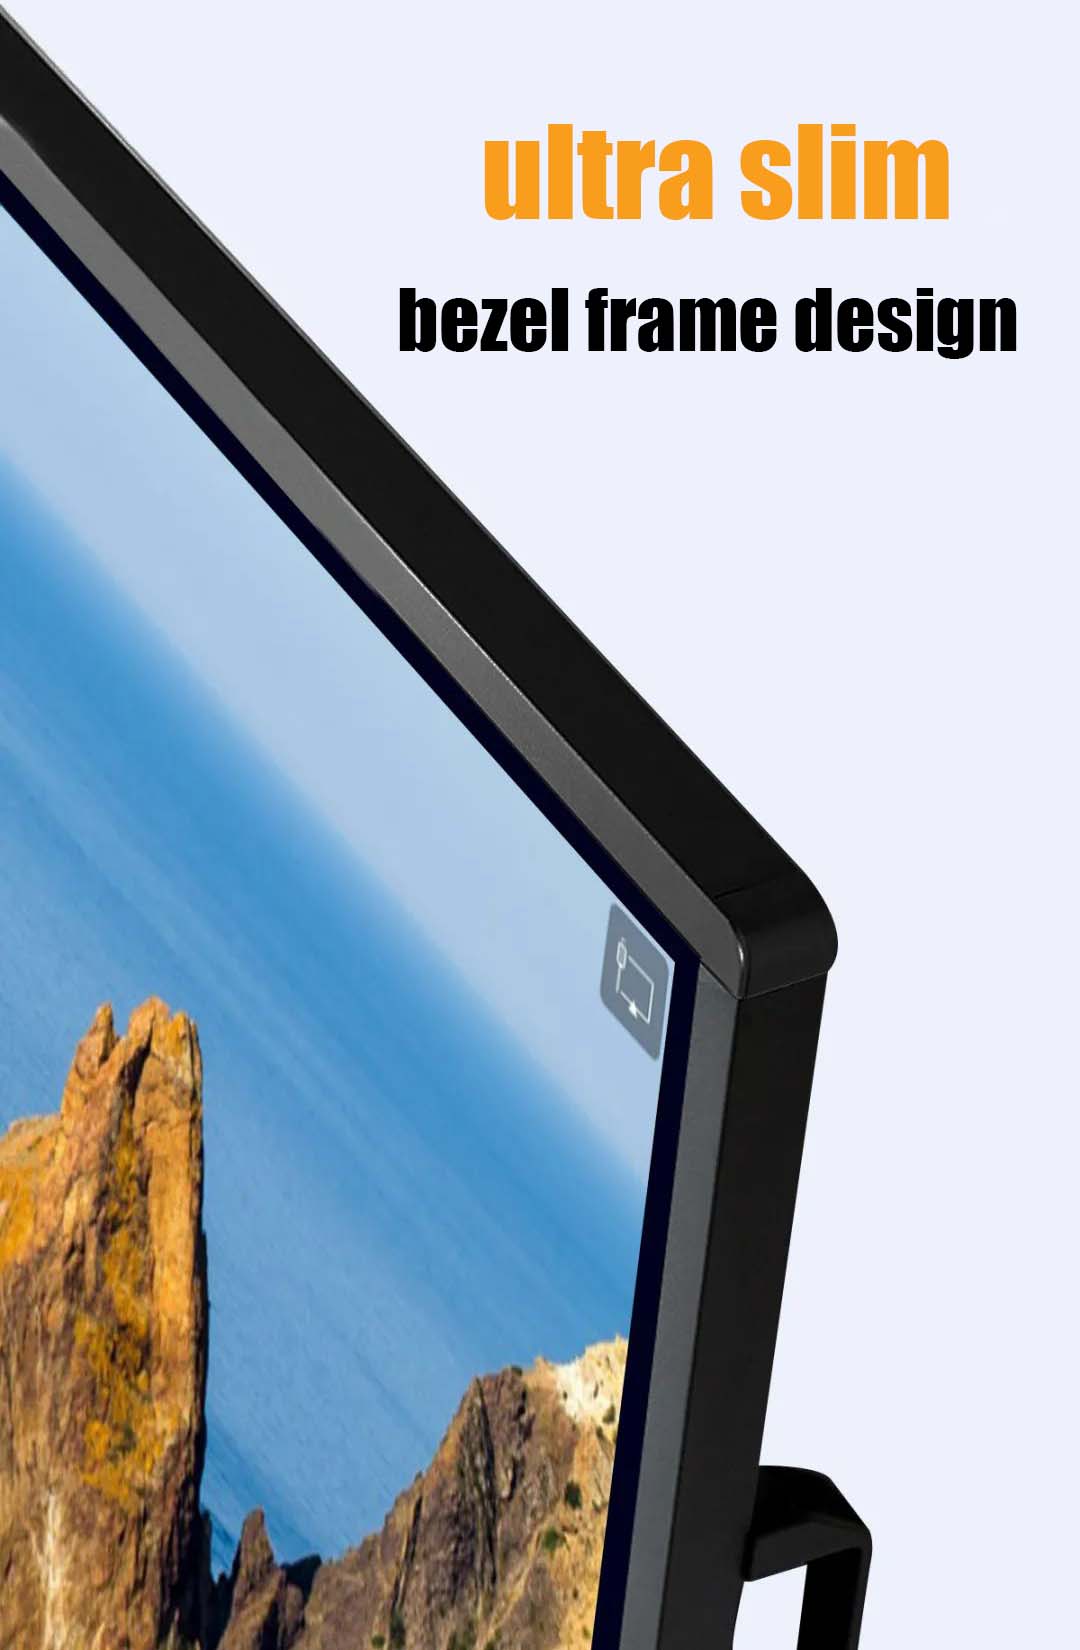 INTECH interactive flat panel DW series with ultra slim bezel frame